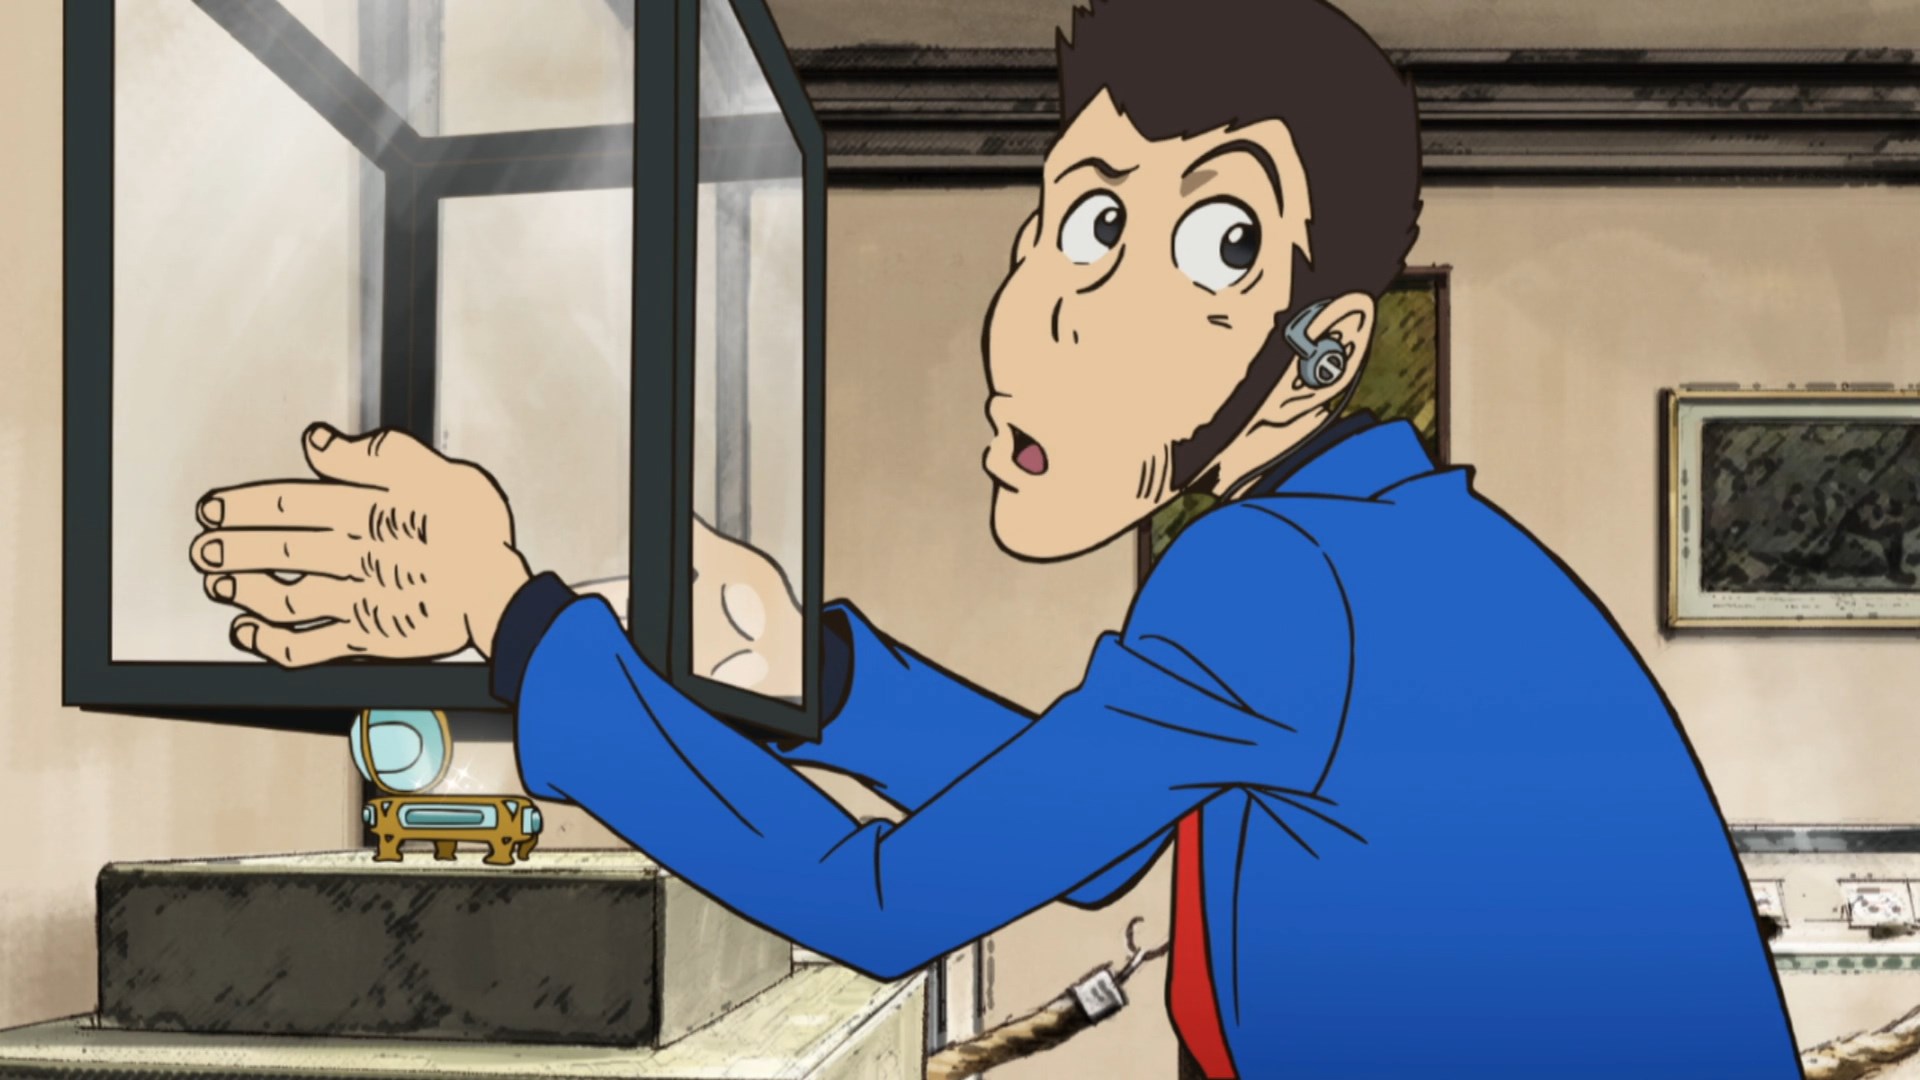 Fifth Lupin III Anime Series Revealed1920 x 1080